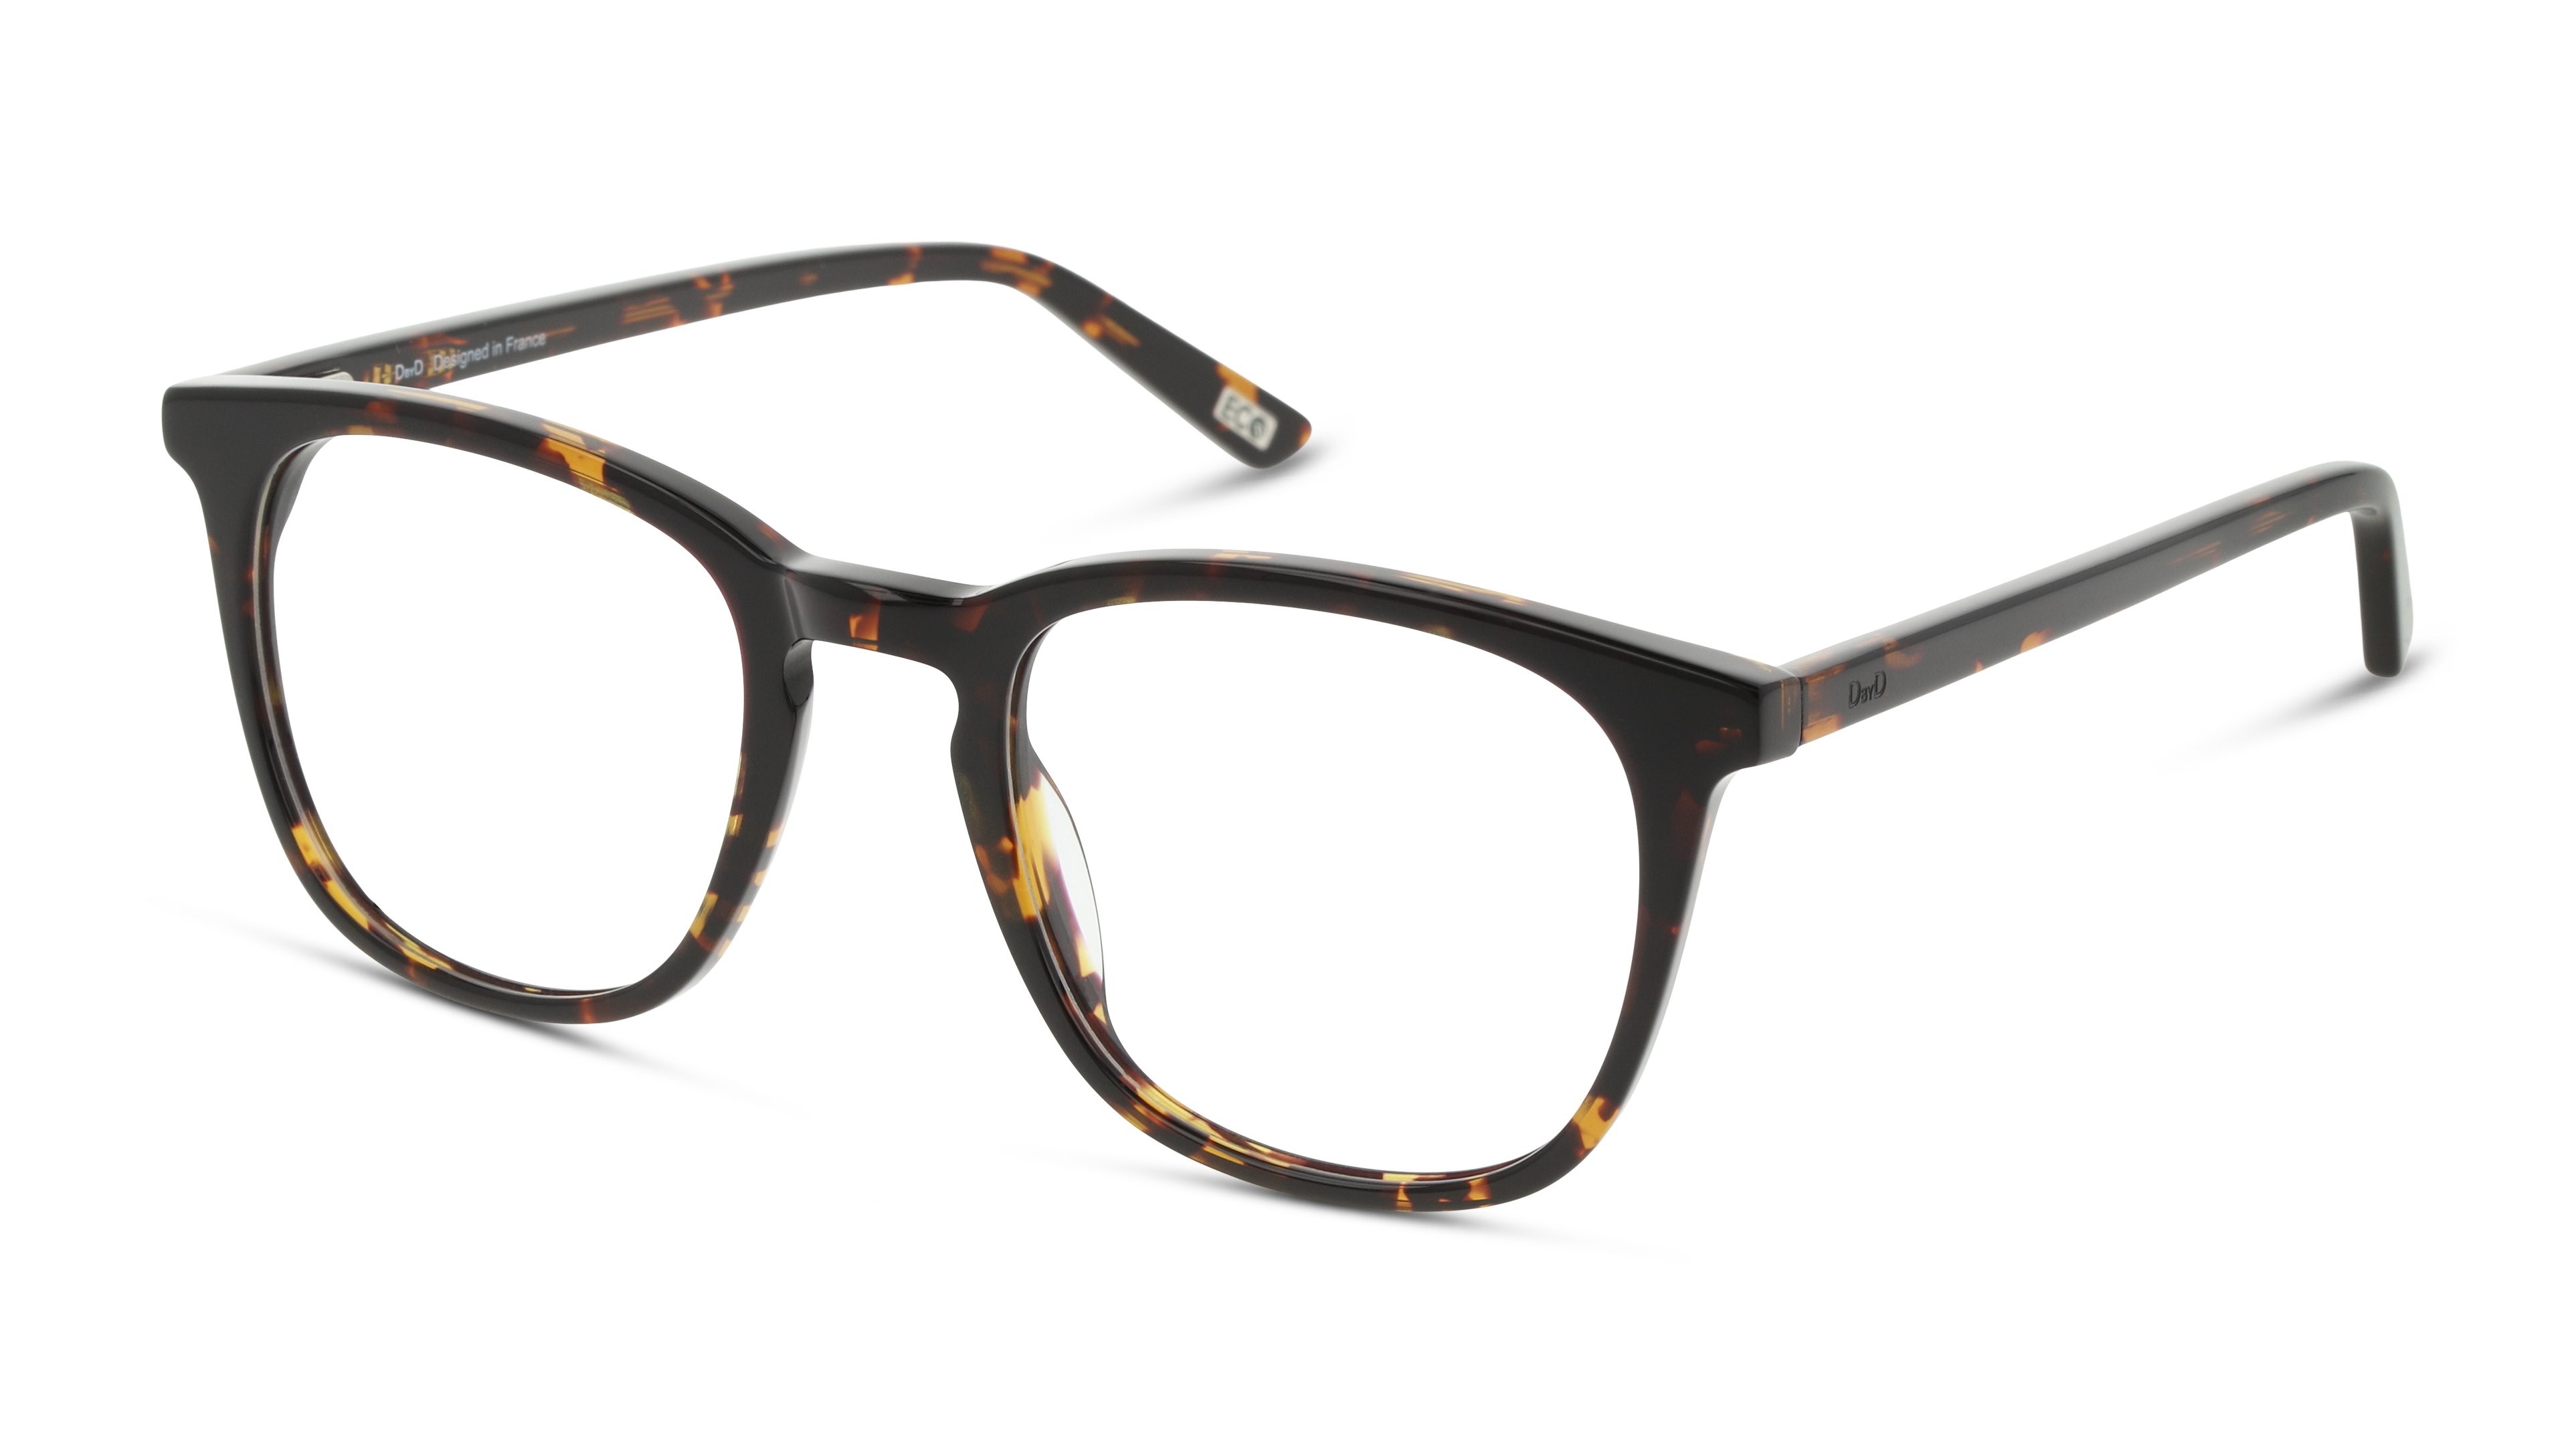 Angle_Left01 DBYD DBOM0035 (HH00) Glasses Transparent / Tortoise Shell